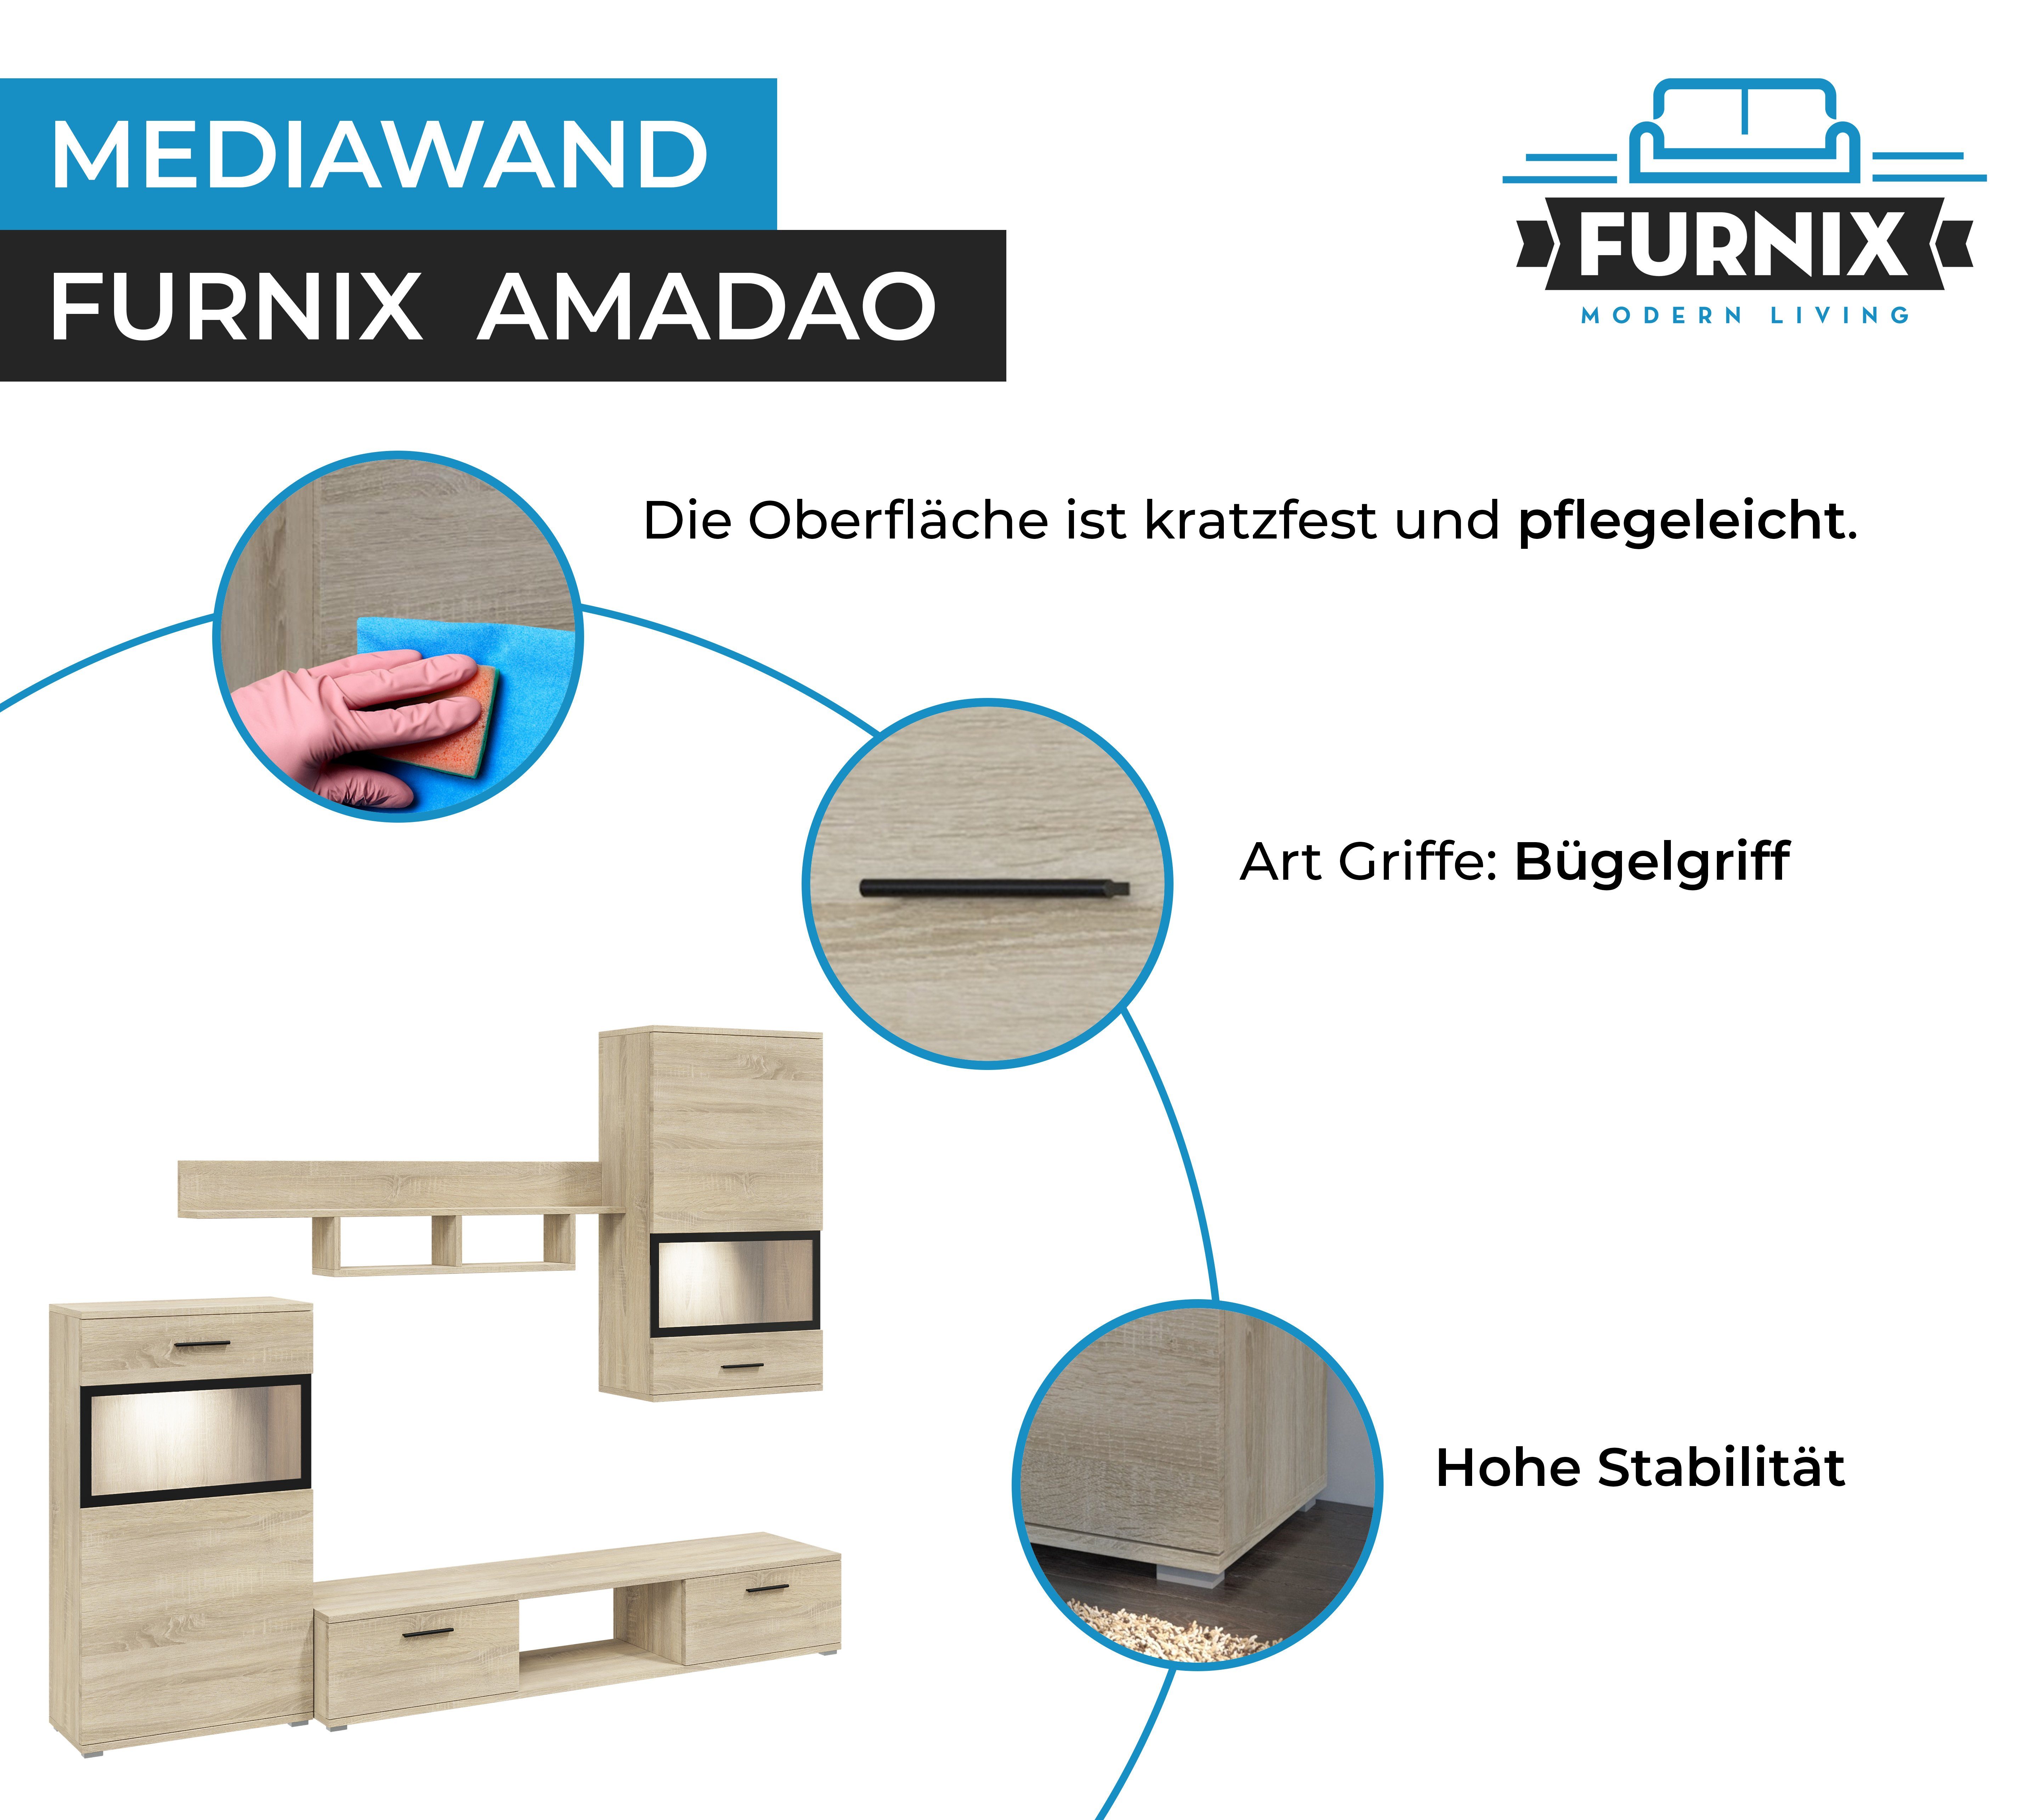 Furnix Wohnwand verglasten Türen mit 4-teilig, AMADAO Mediawand